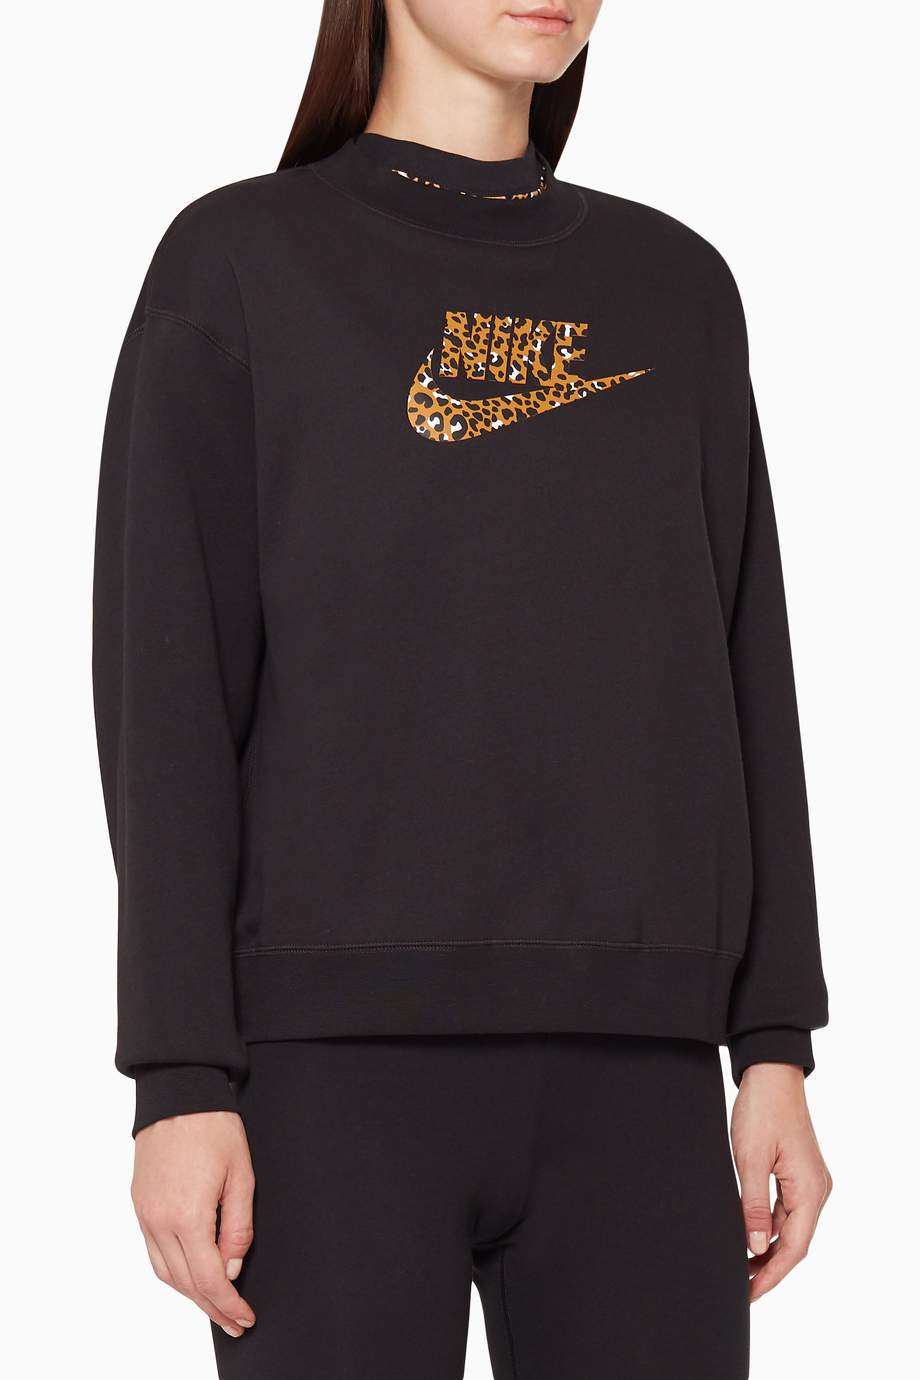 Shop Nike Black Leopard-Print & Logo Sweatshirt for Women | Ounass UAE